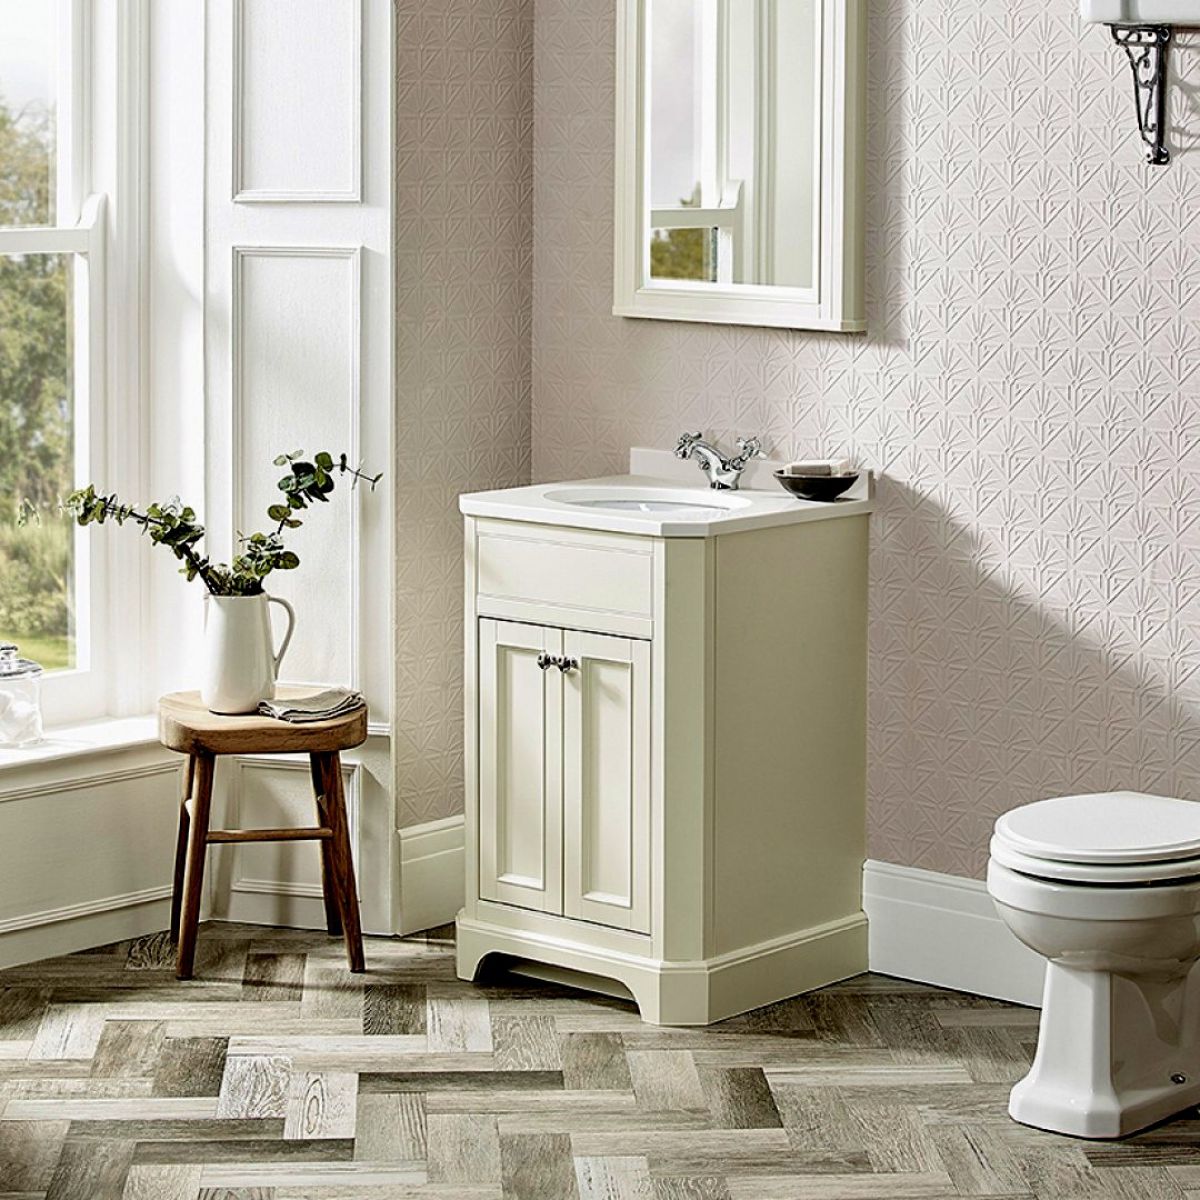 image example of freestanding bathroom furniture